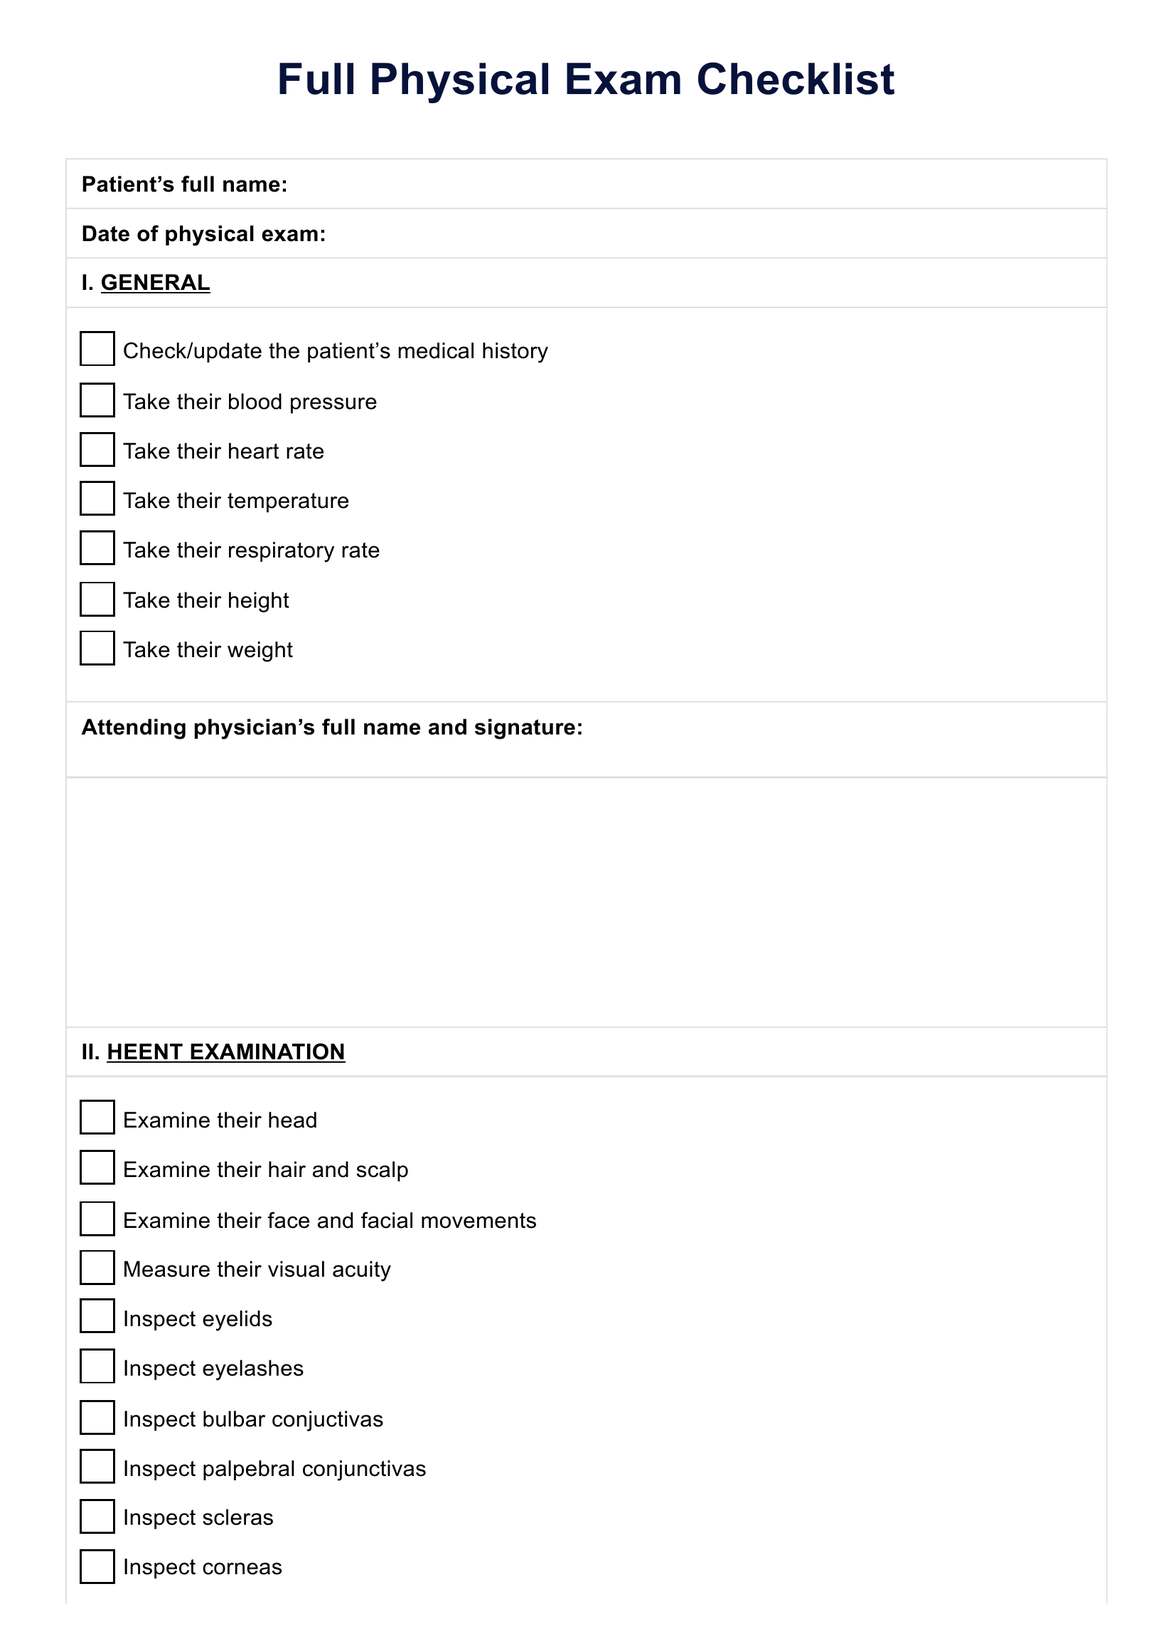 Full Physical Exam Checklist PDF Example